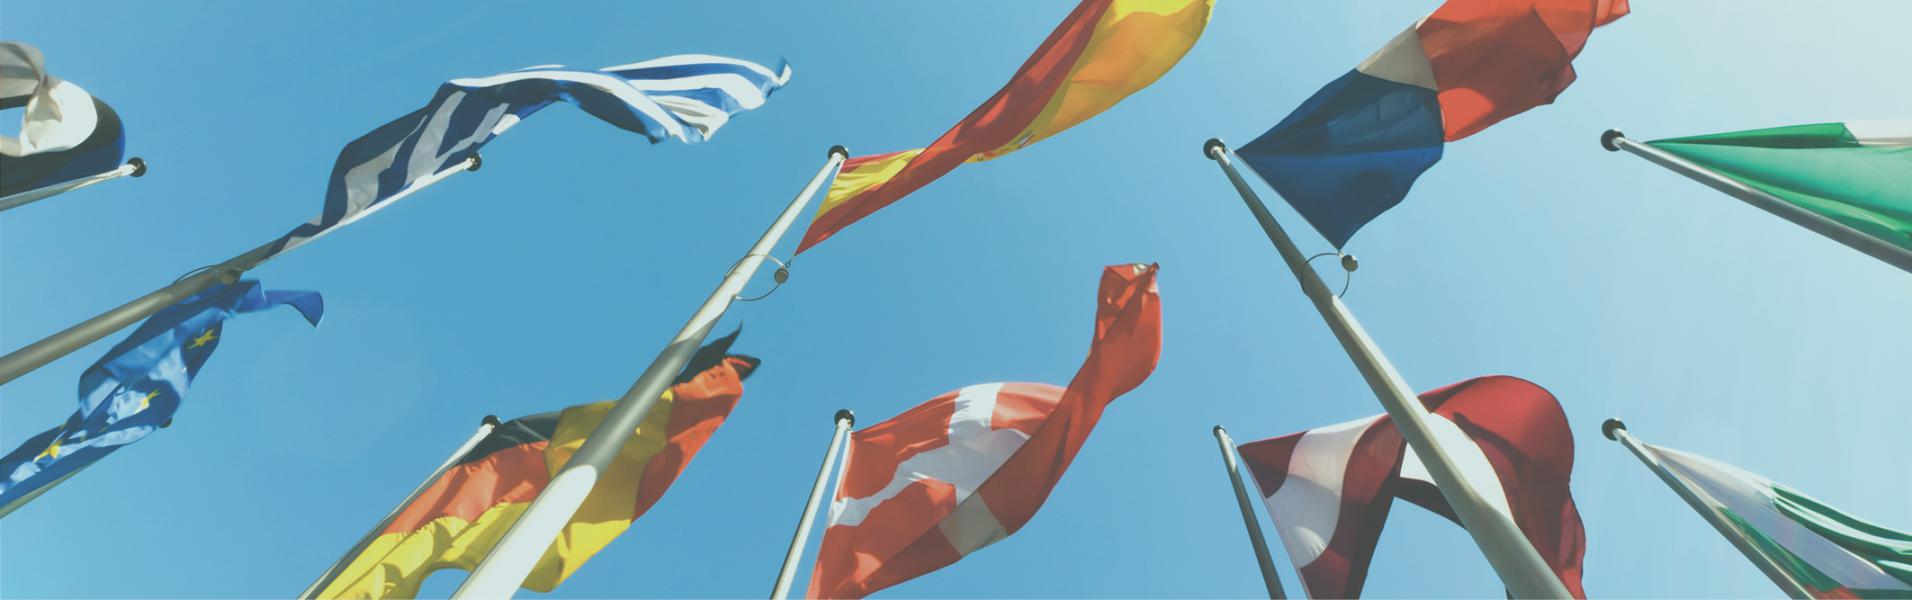  Various international flags